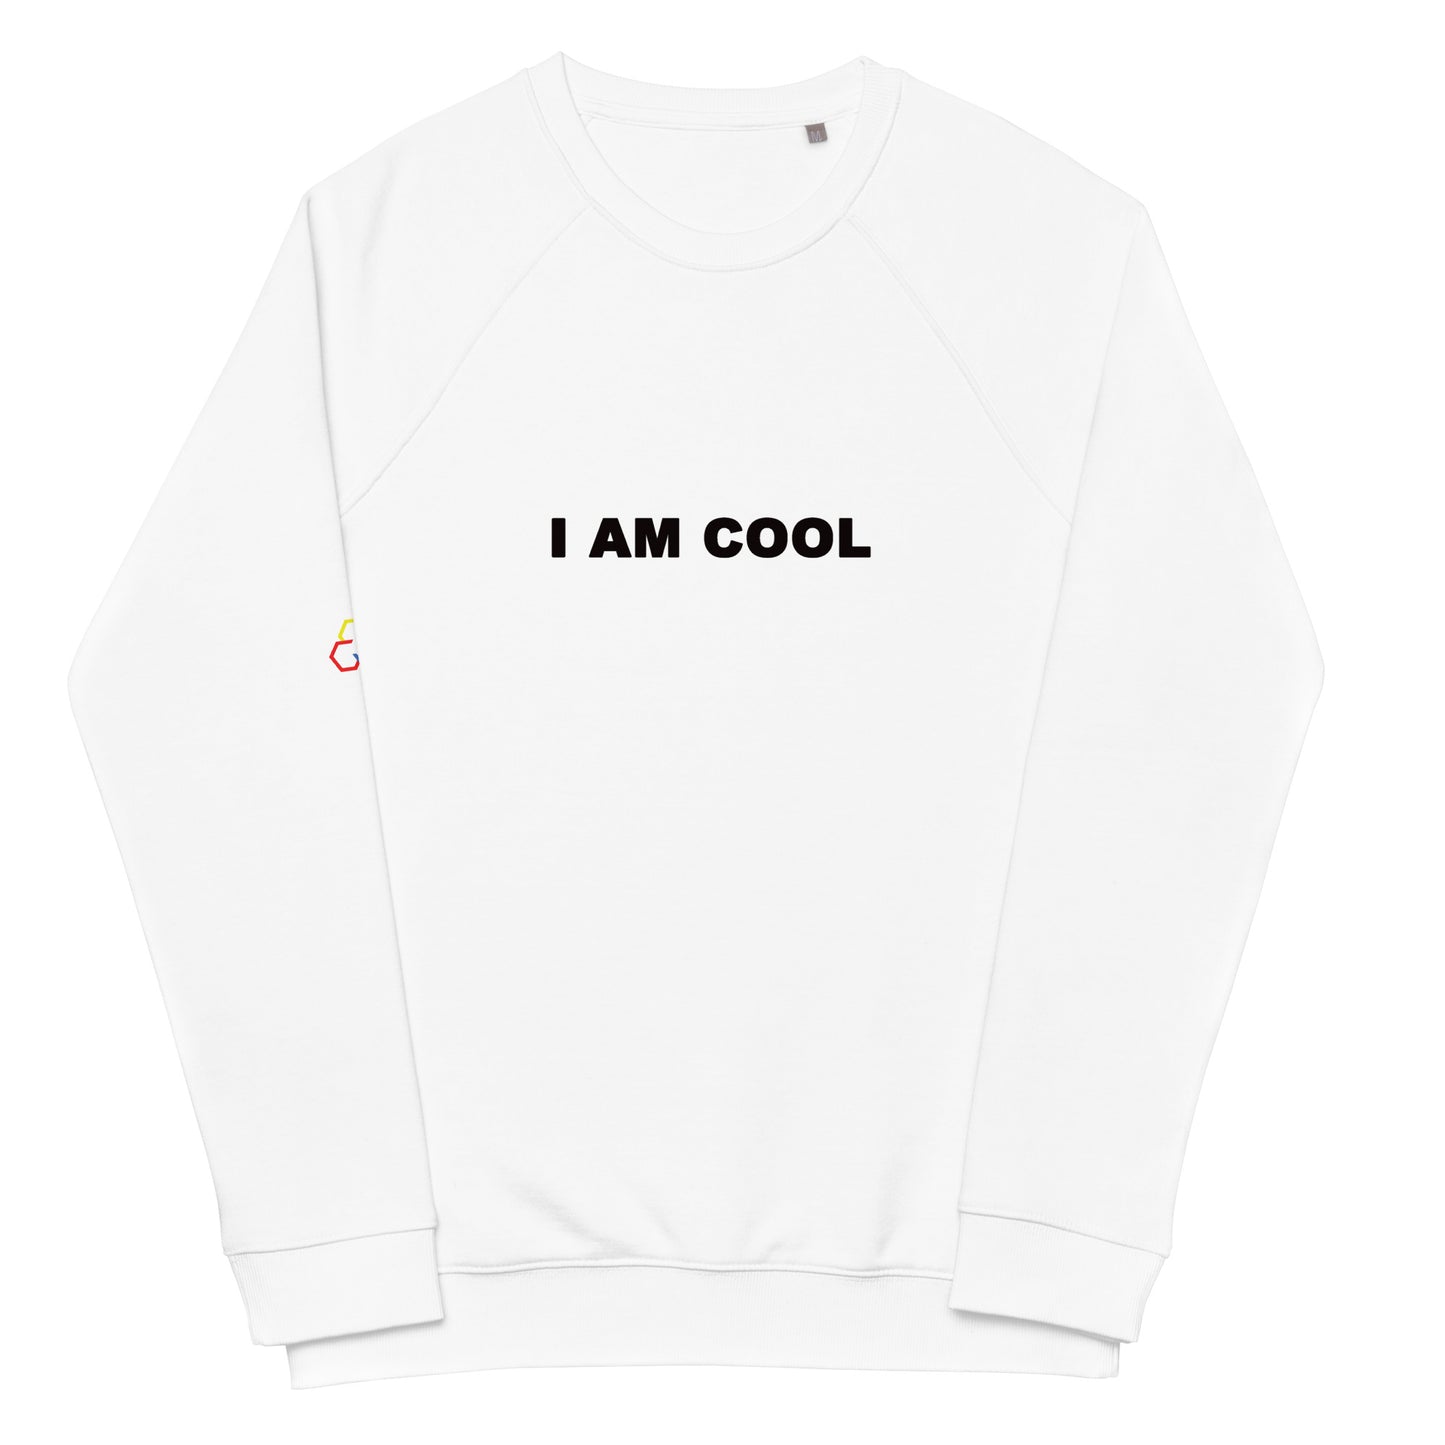 I AM COOL - Unisex organic raglan sweatshirt